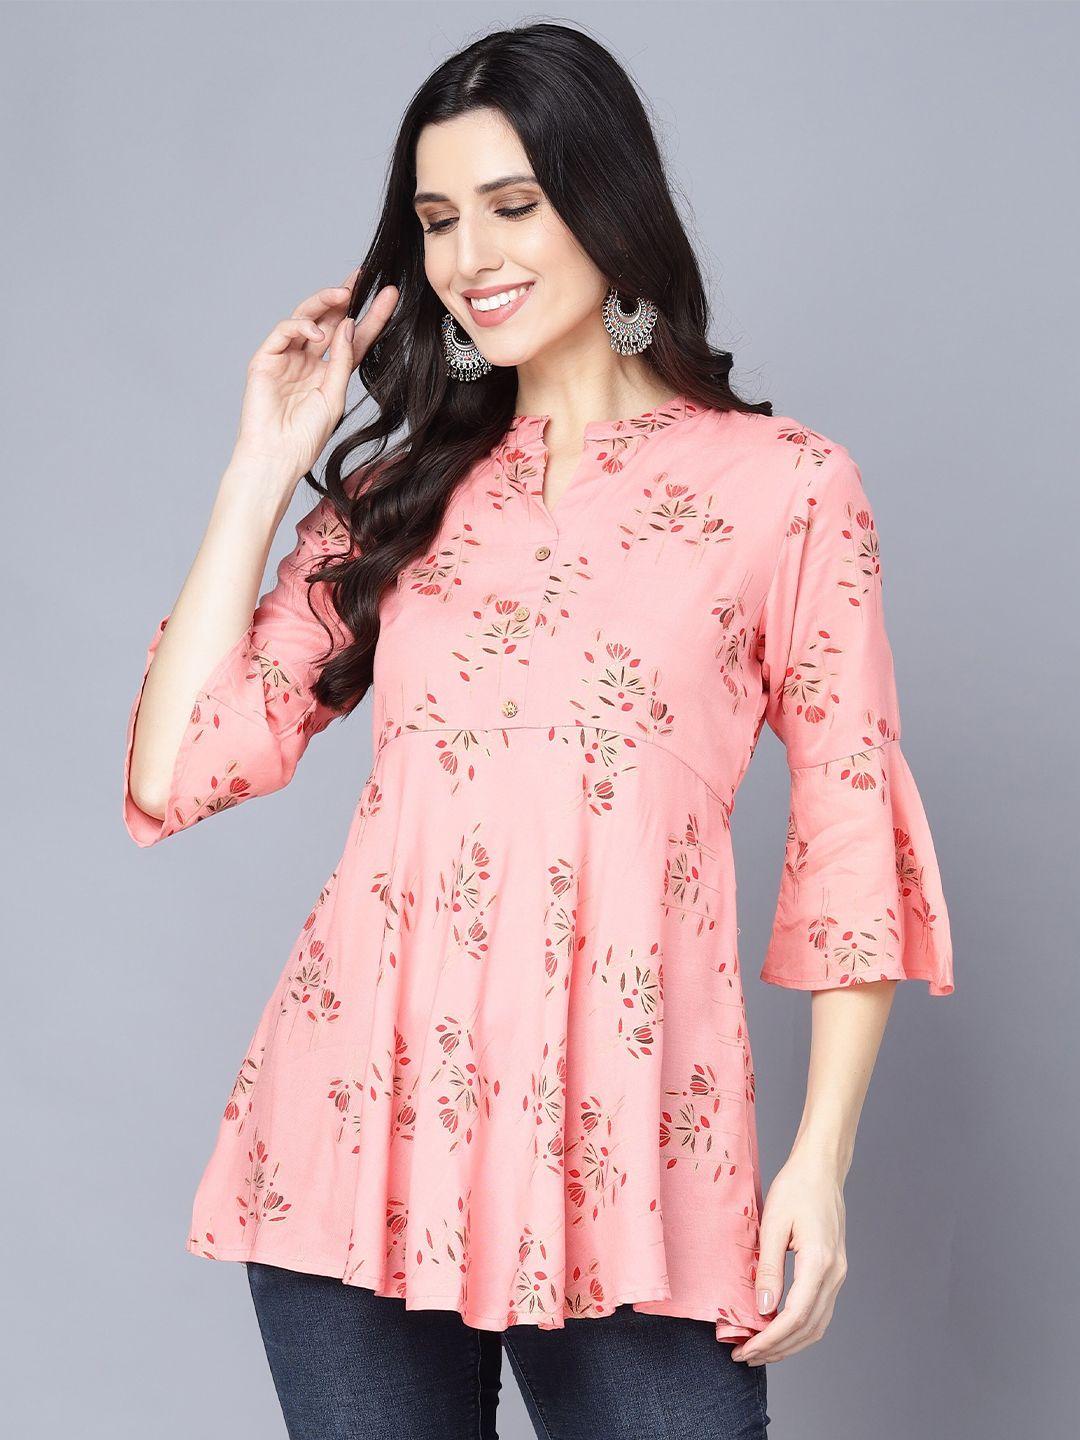 subh laxmi peach-coloured floral print shirt style top